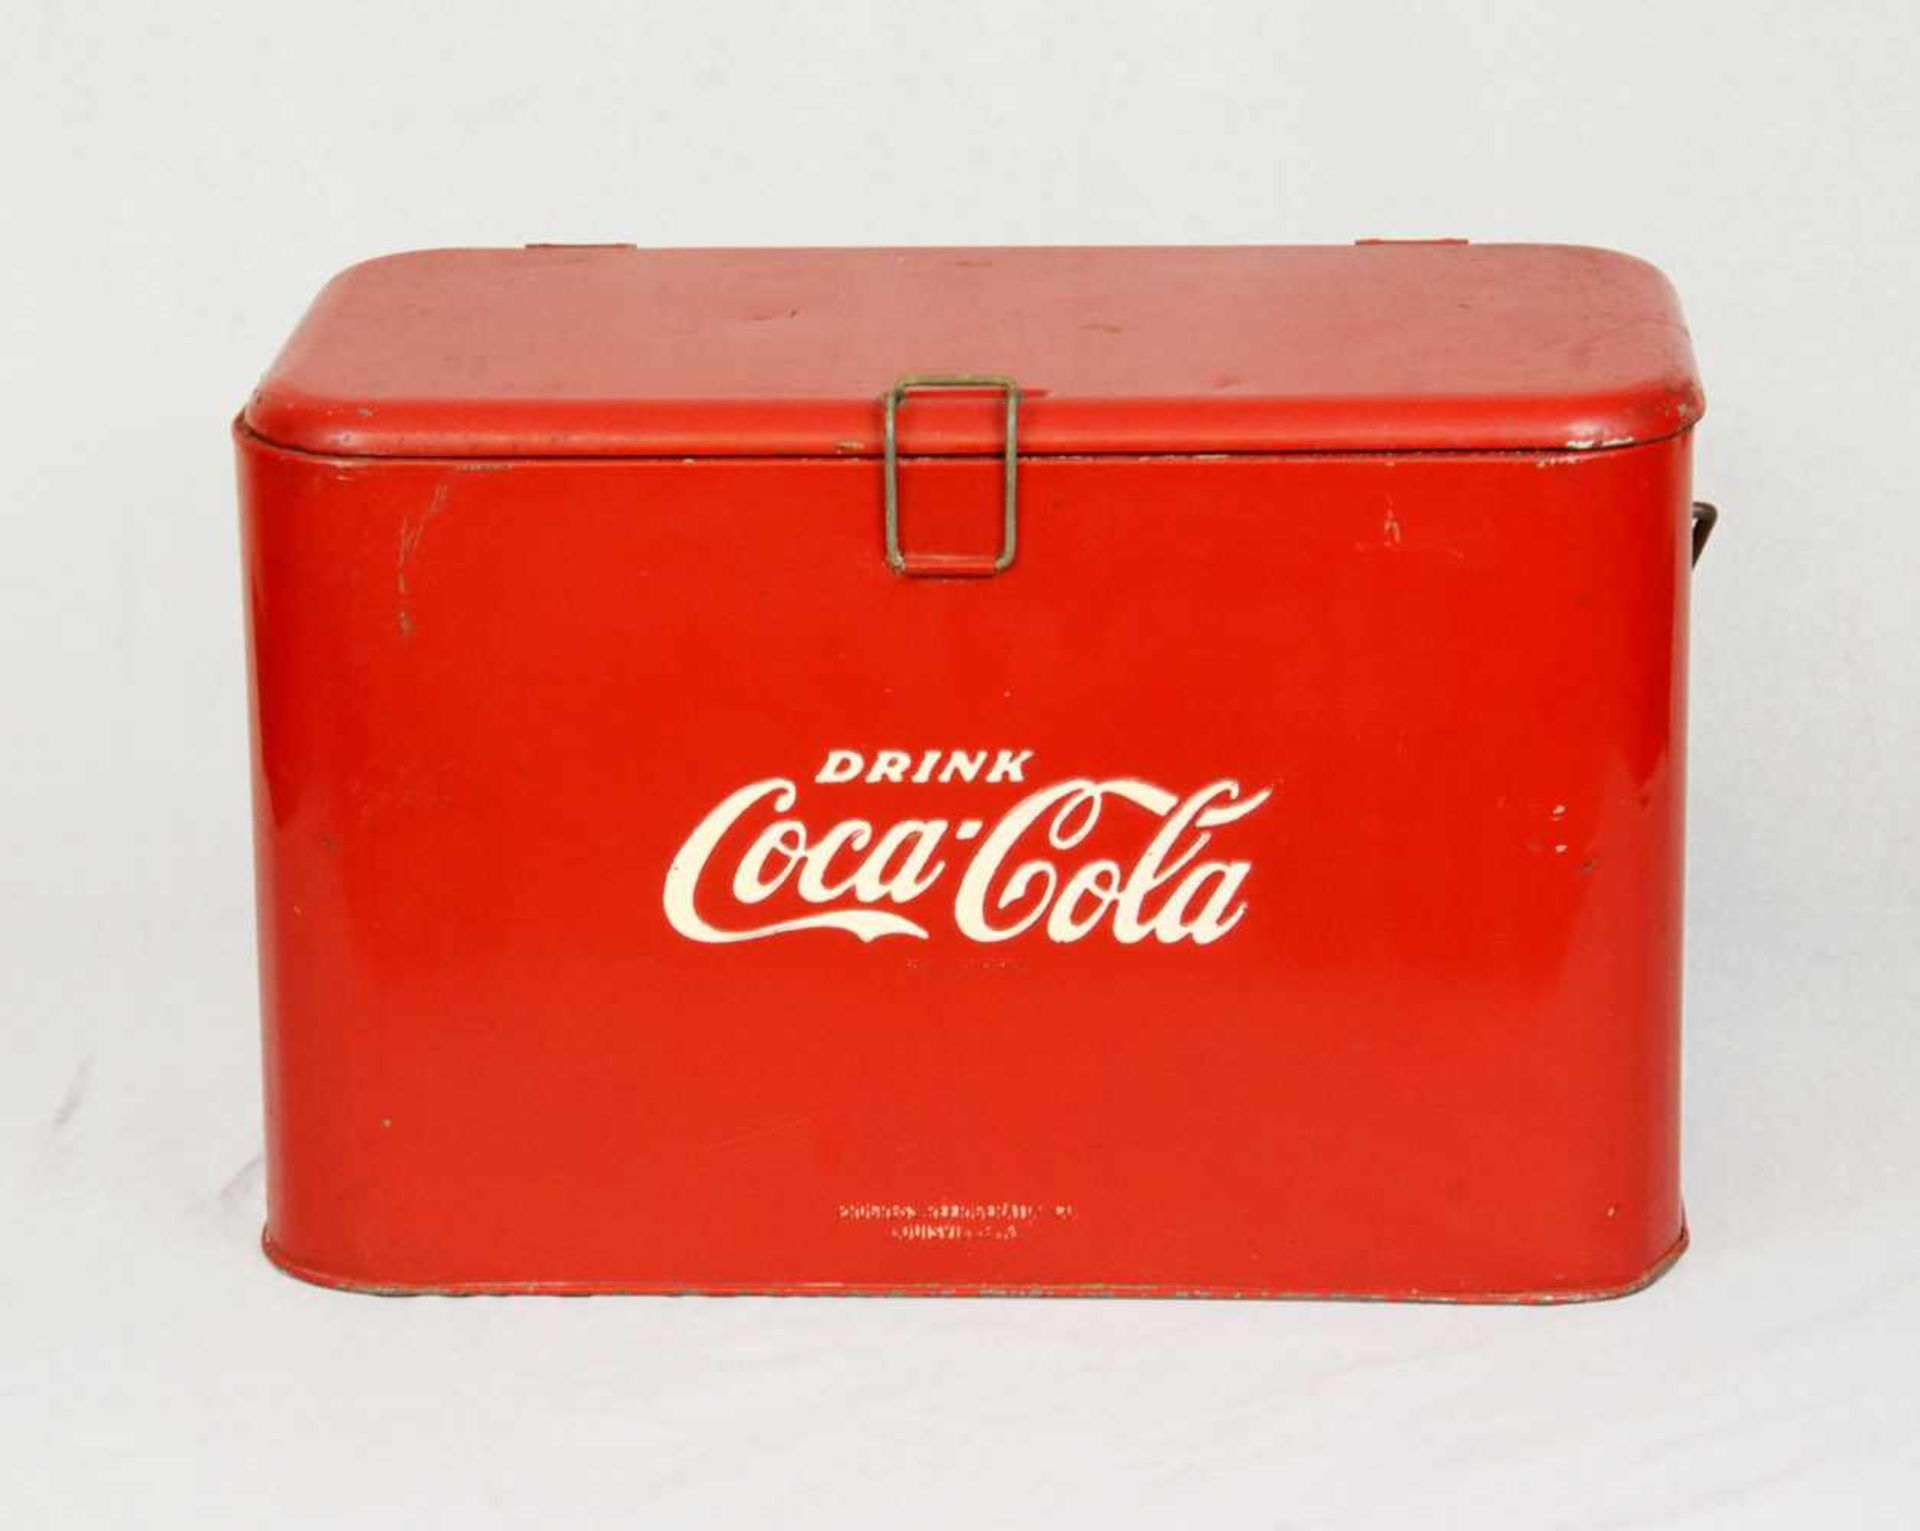 Original Coca-Cola cooler boxOriginal, metal Coca-Cola cooler/refrigeration box. It's in very good